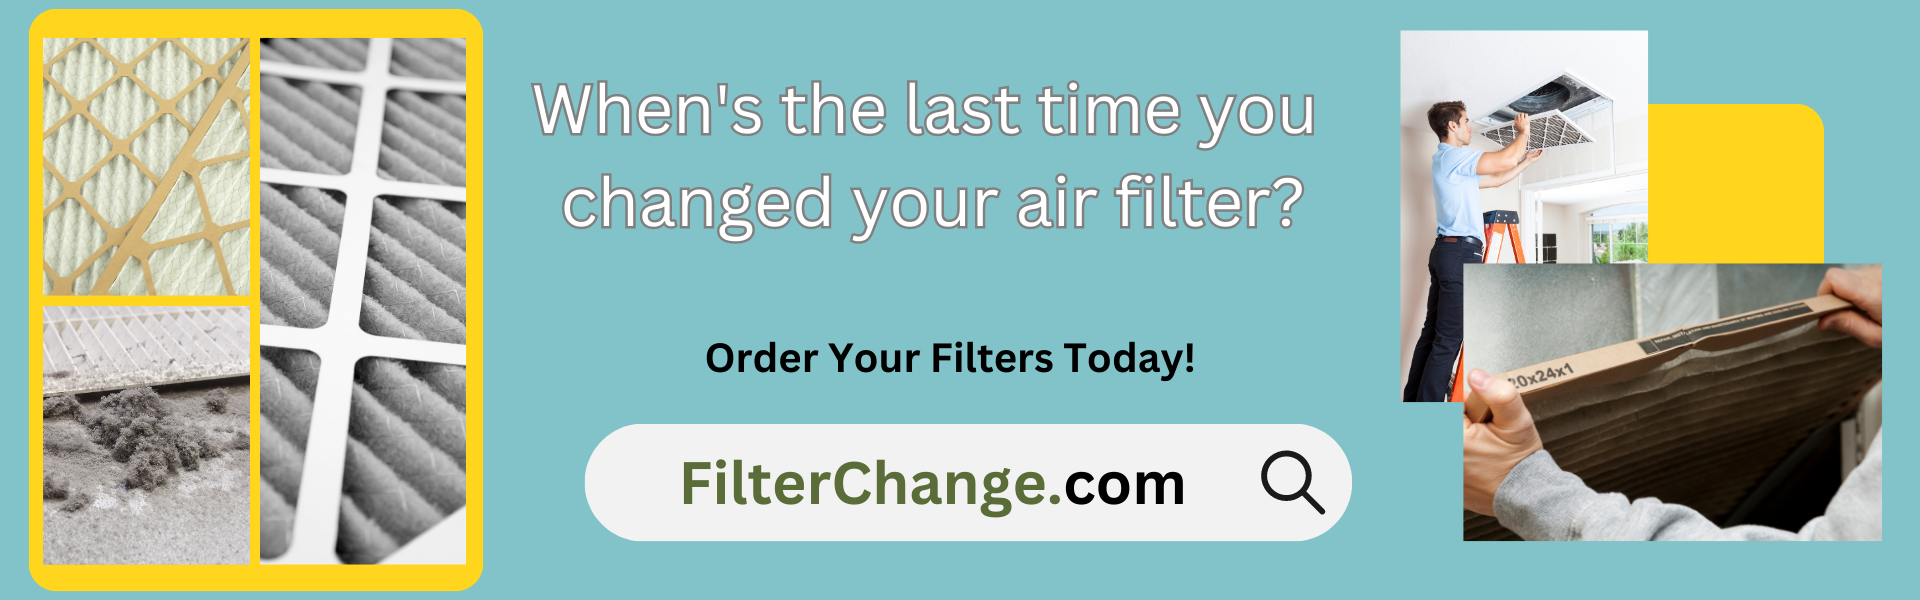 Filter Change